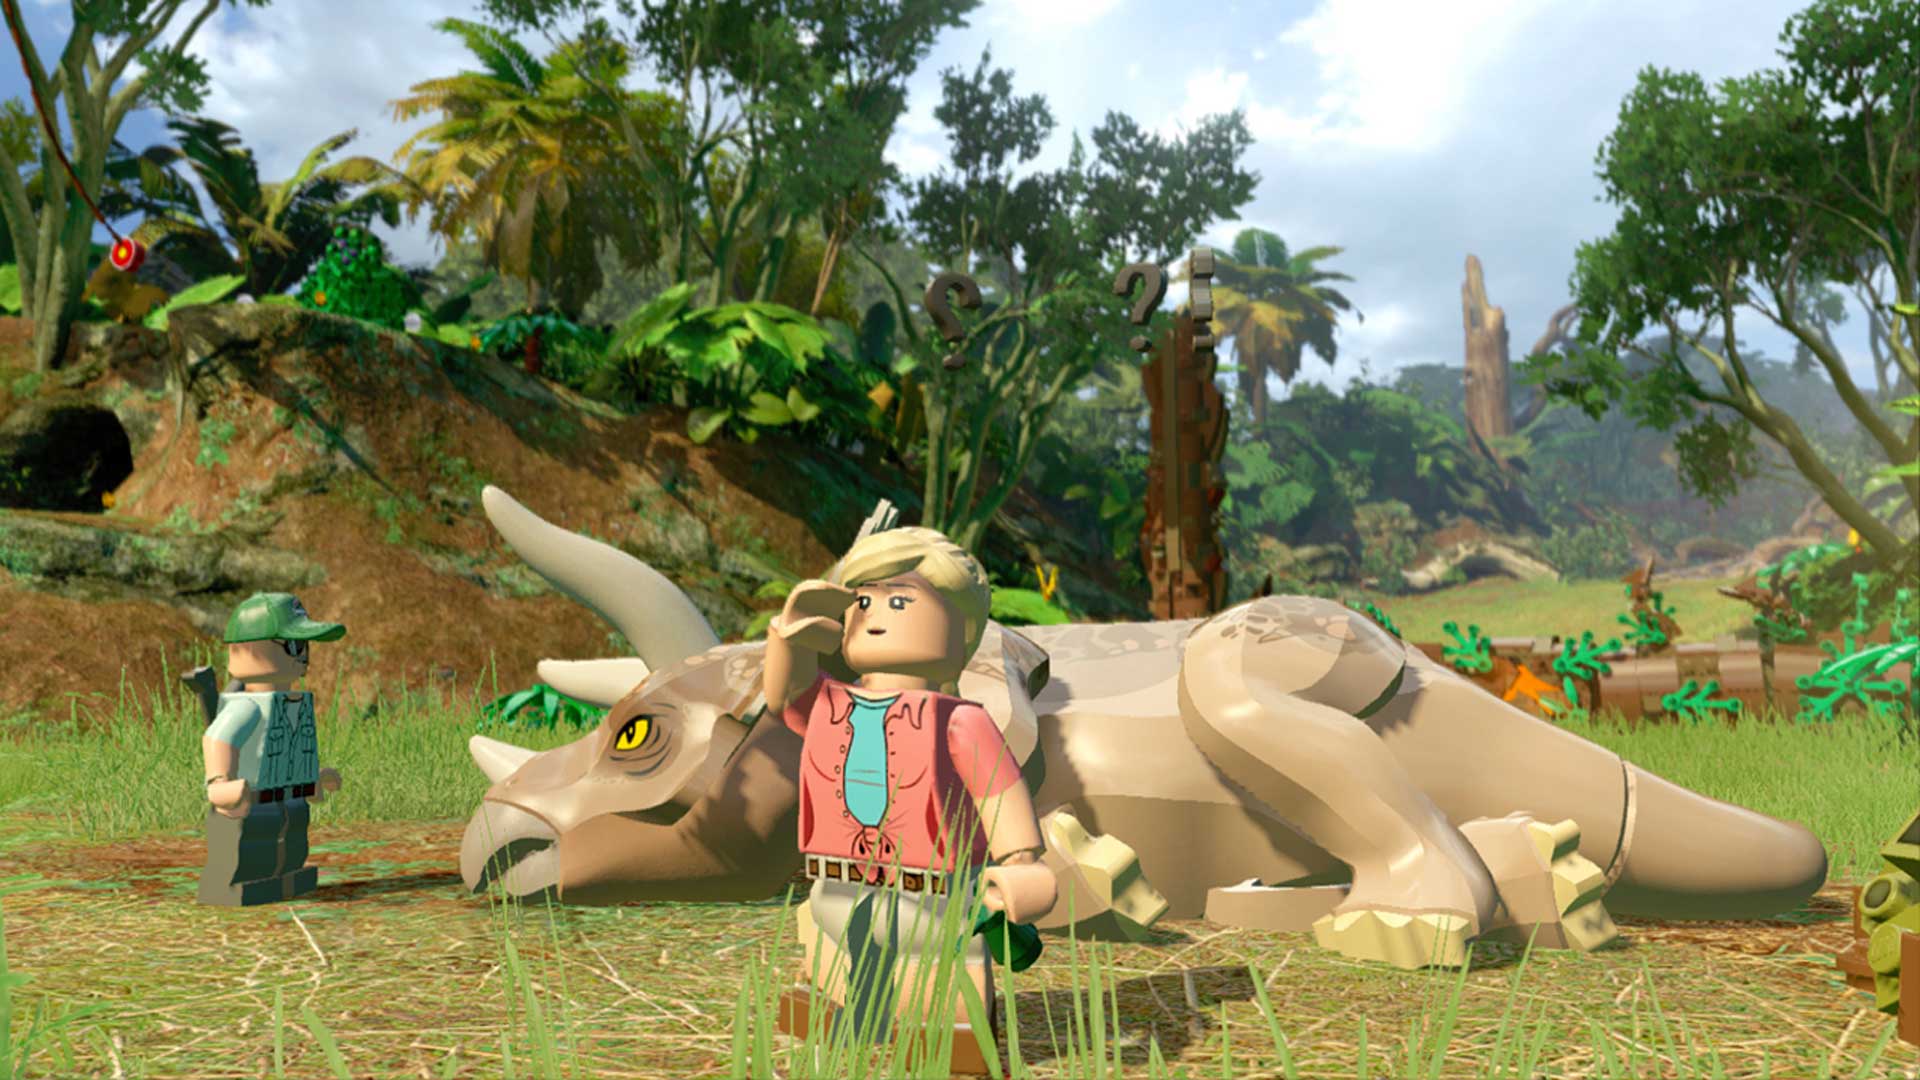 Jogo LEGO Jurassic World Playstation Hits - PS4 - Telltale Games